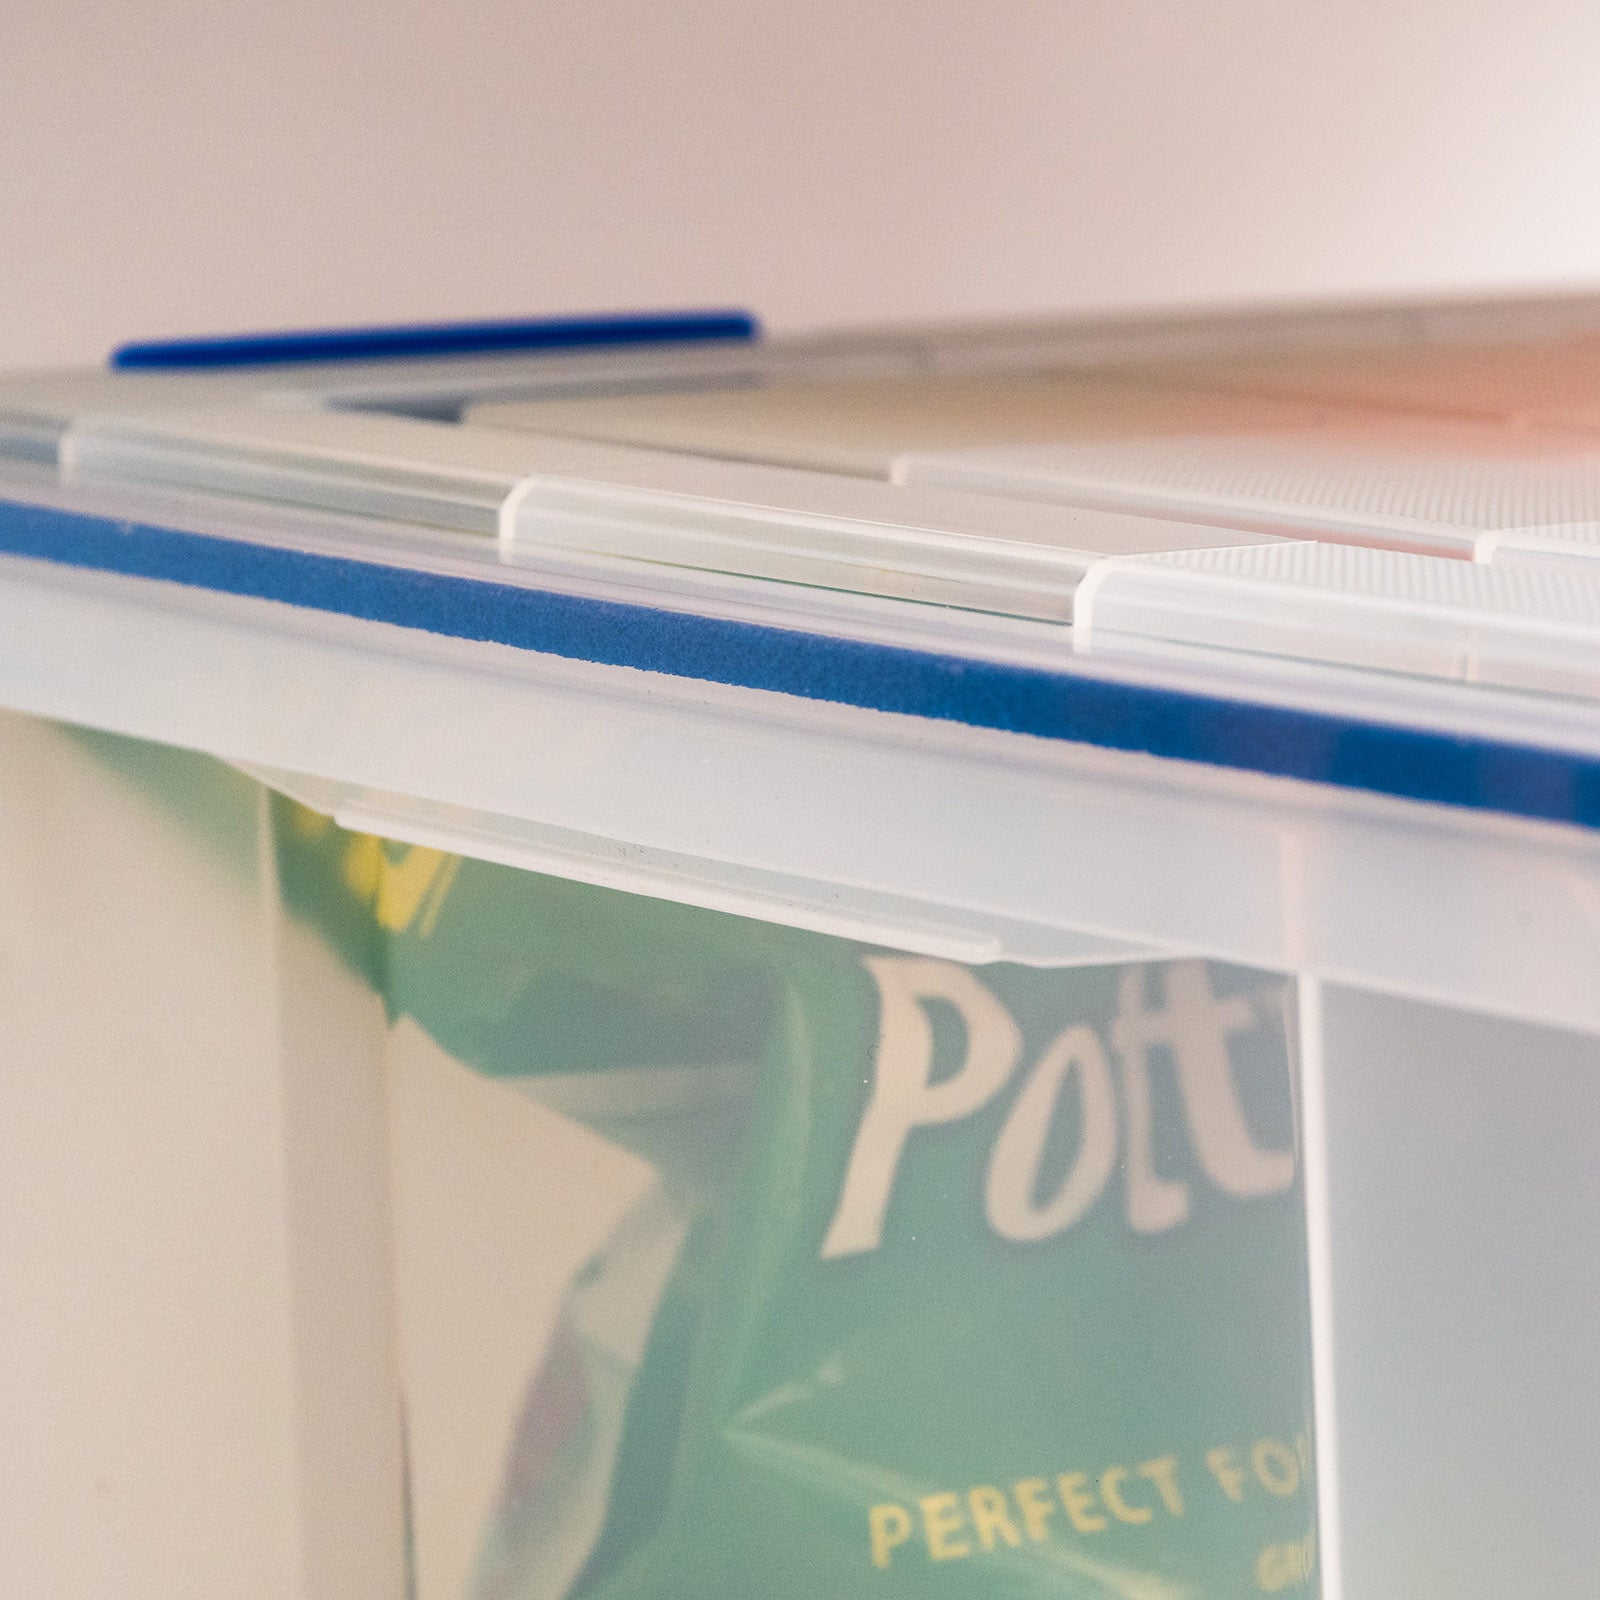 44 Quart WeatherPro™ Gasket Clear Plastic Storage Box with Lid